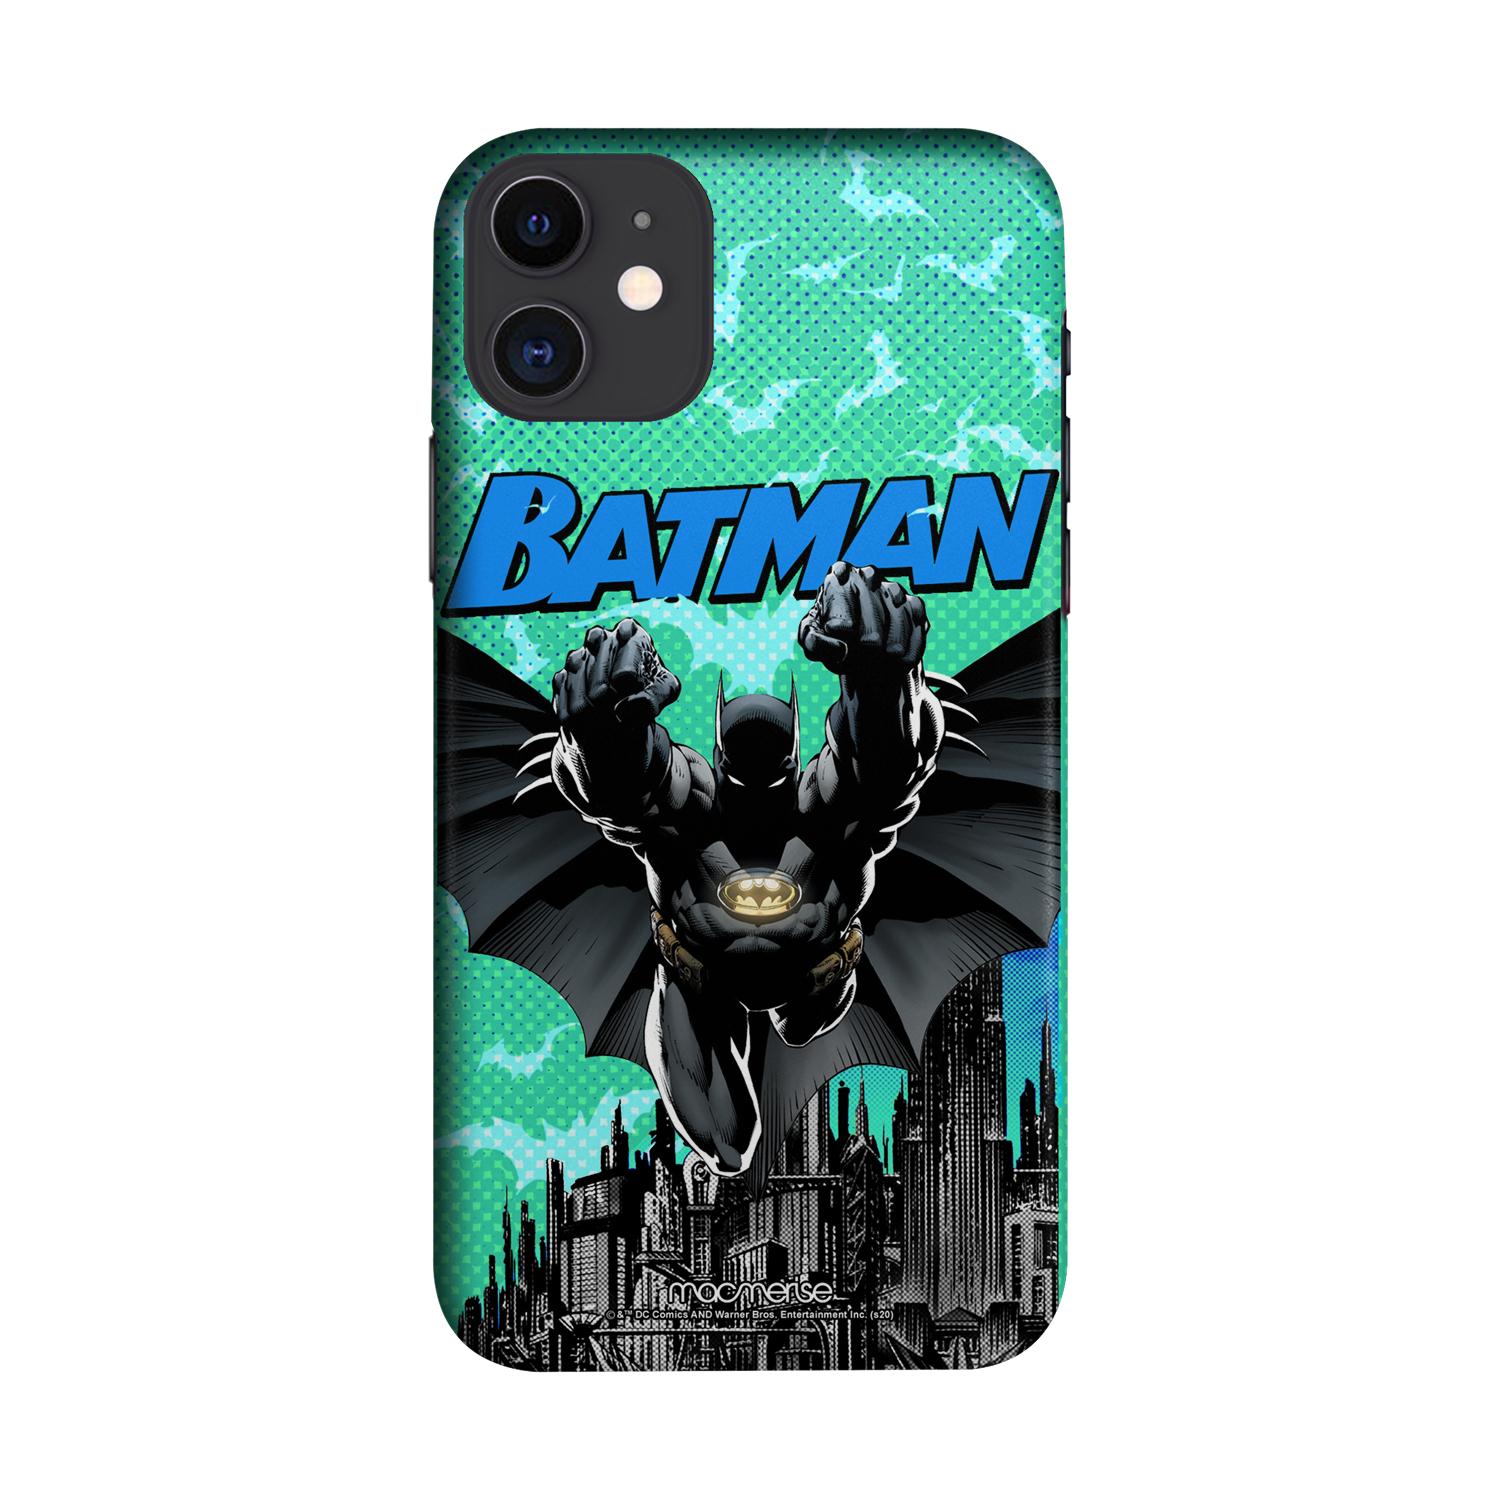 Buy Bat on the hunt - Sleek Phone Case for iPhone 11 Online